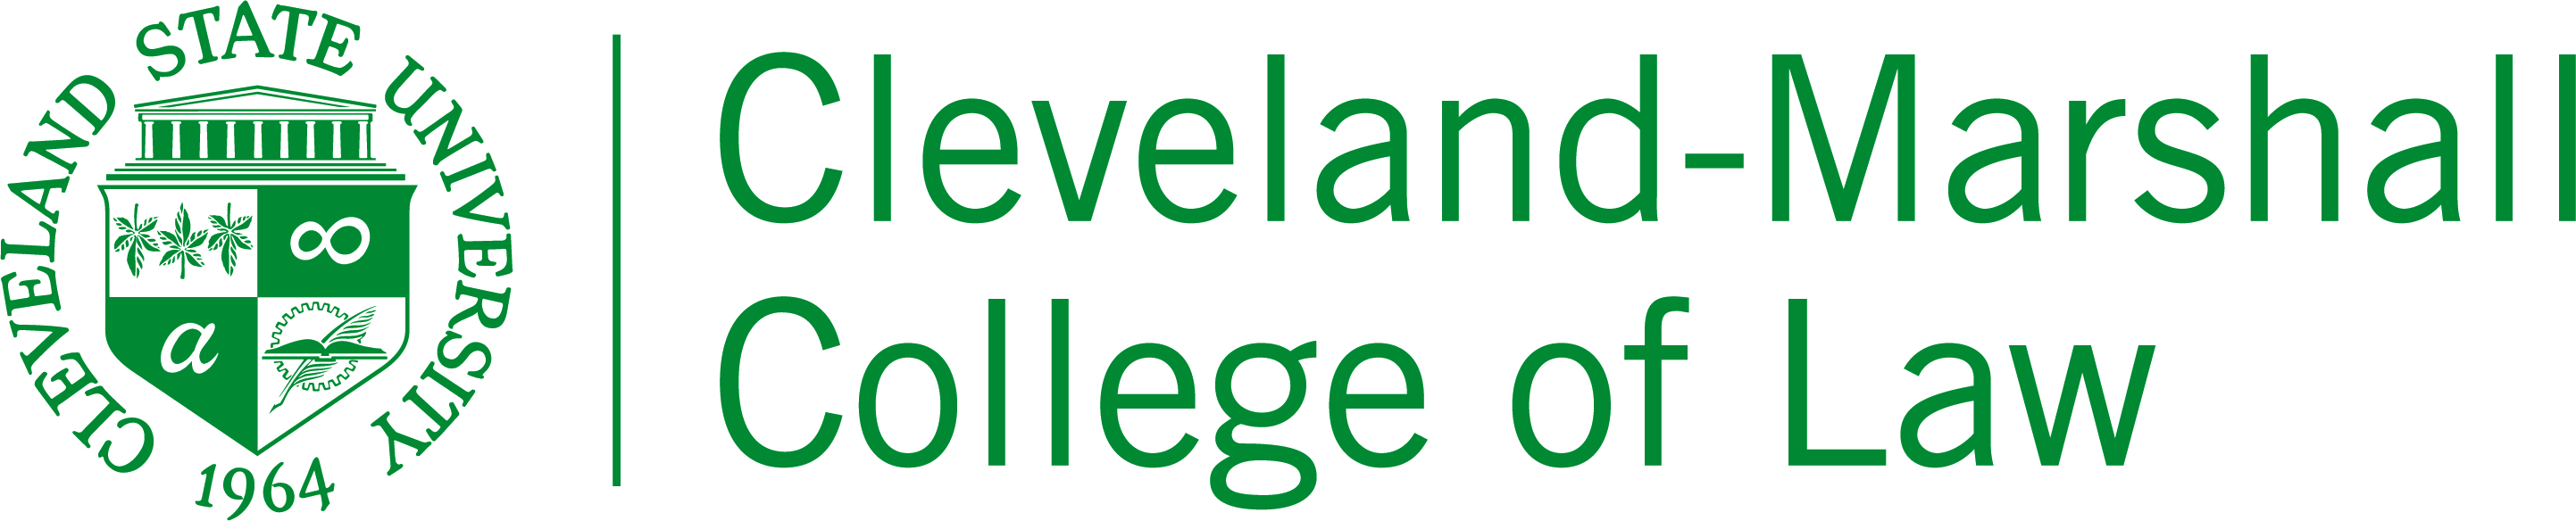 CSU Law School Logo